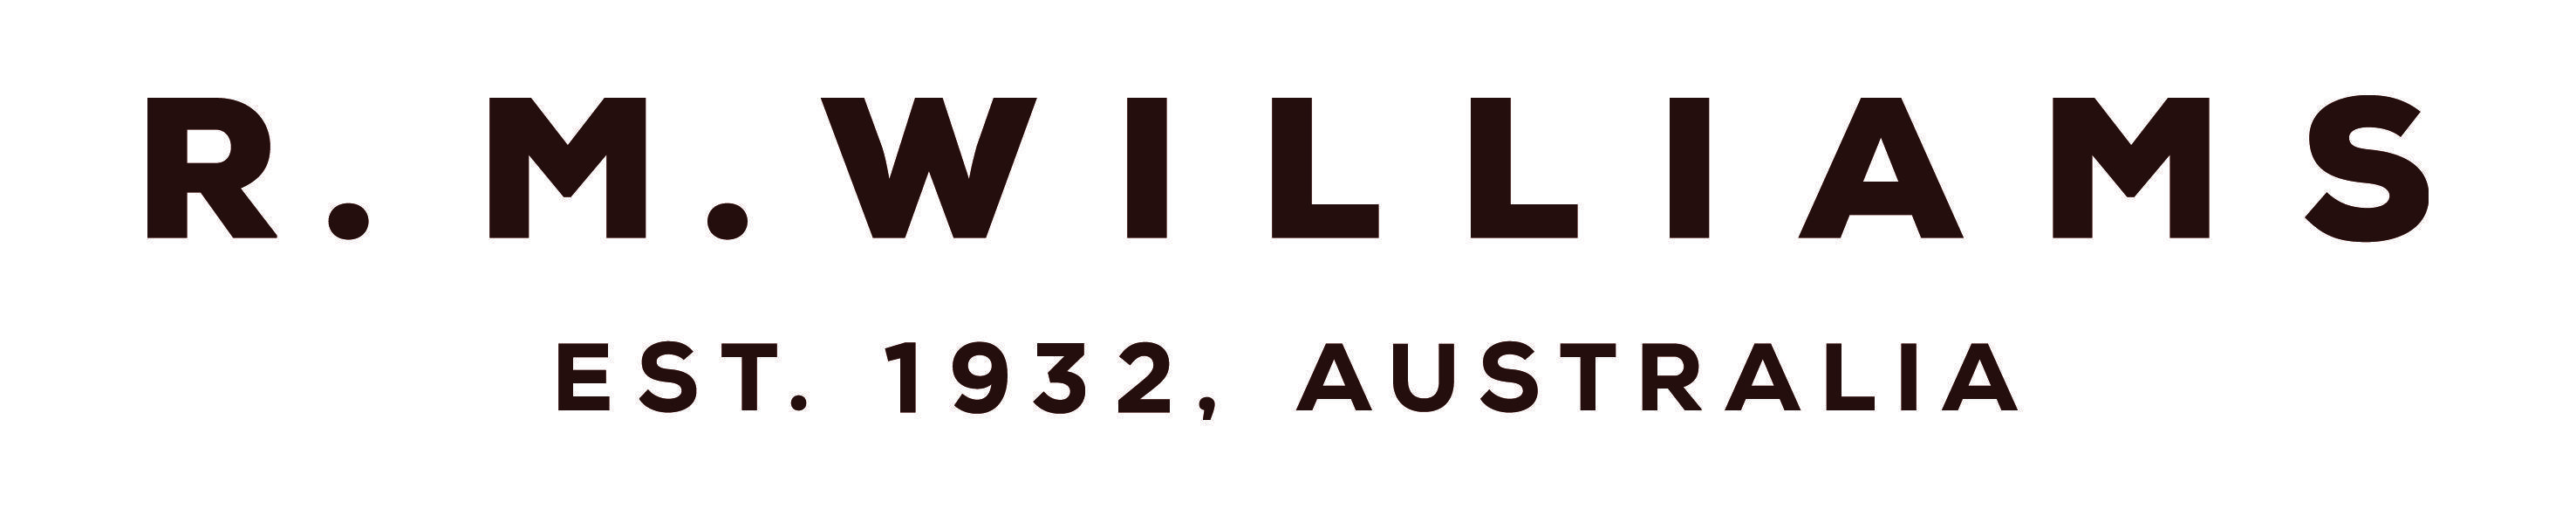 Australian Clothing Company Logo - Images for australian clothing company logo desktophddesignwall3d.ga